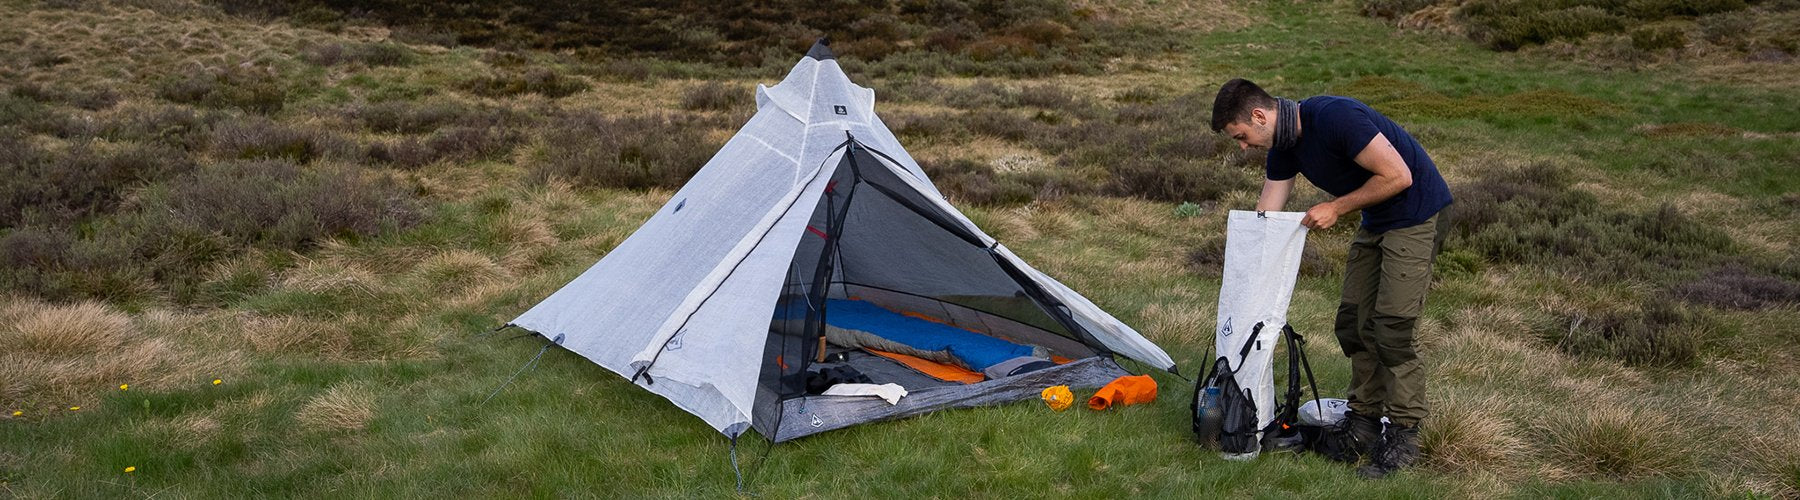 Hyperlite Mountain Gear Unbound 2P Tent Review - The Trek